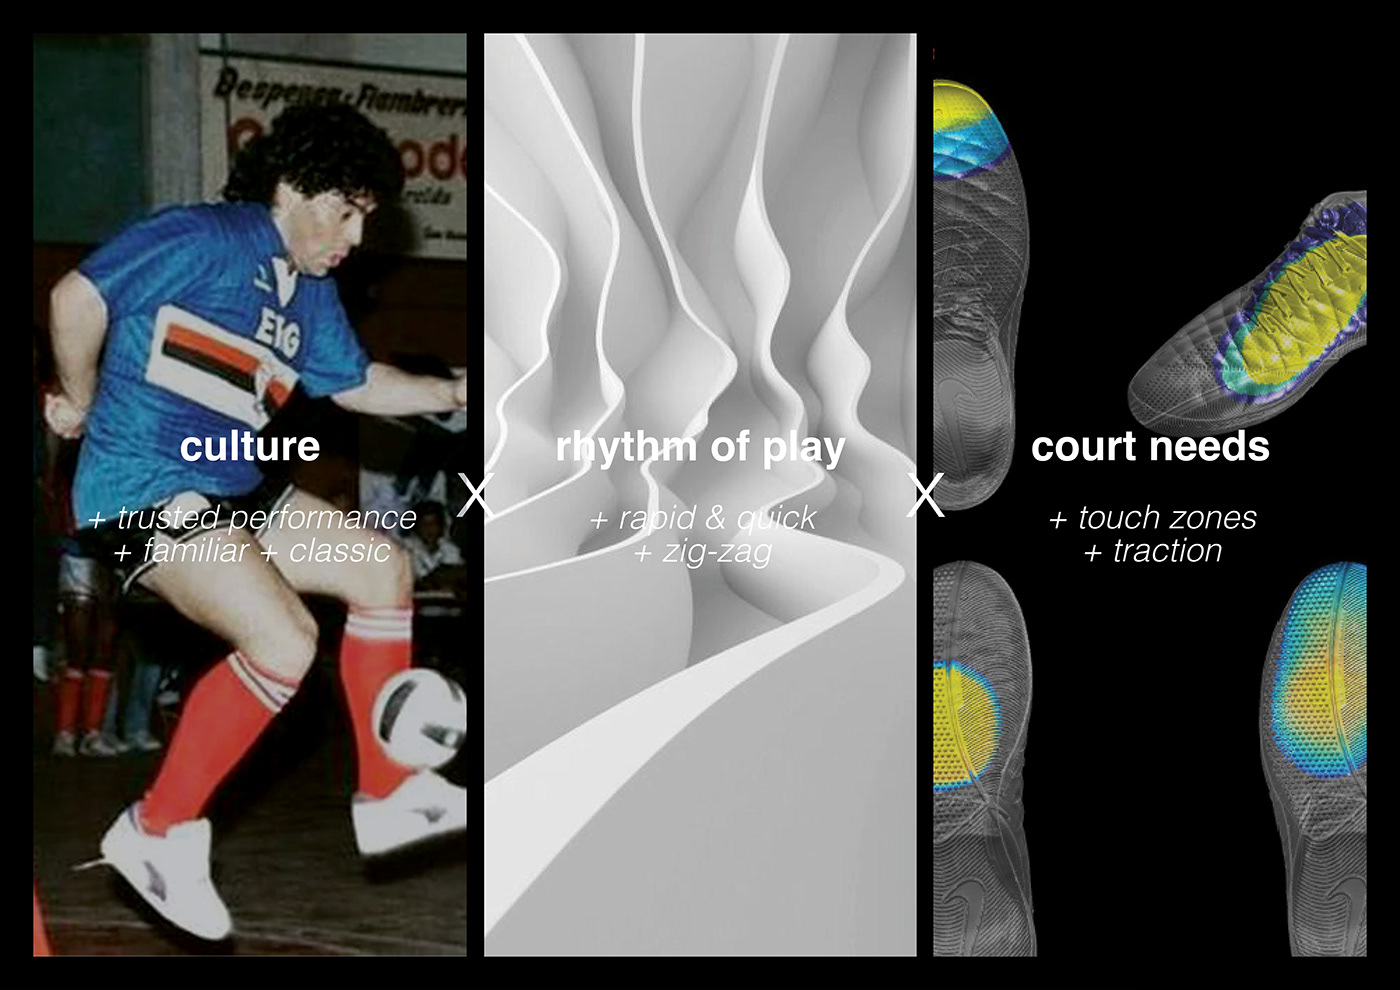 footwear futsal Futbol soccer Sports Design puma